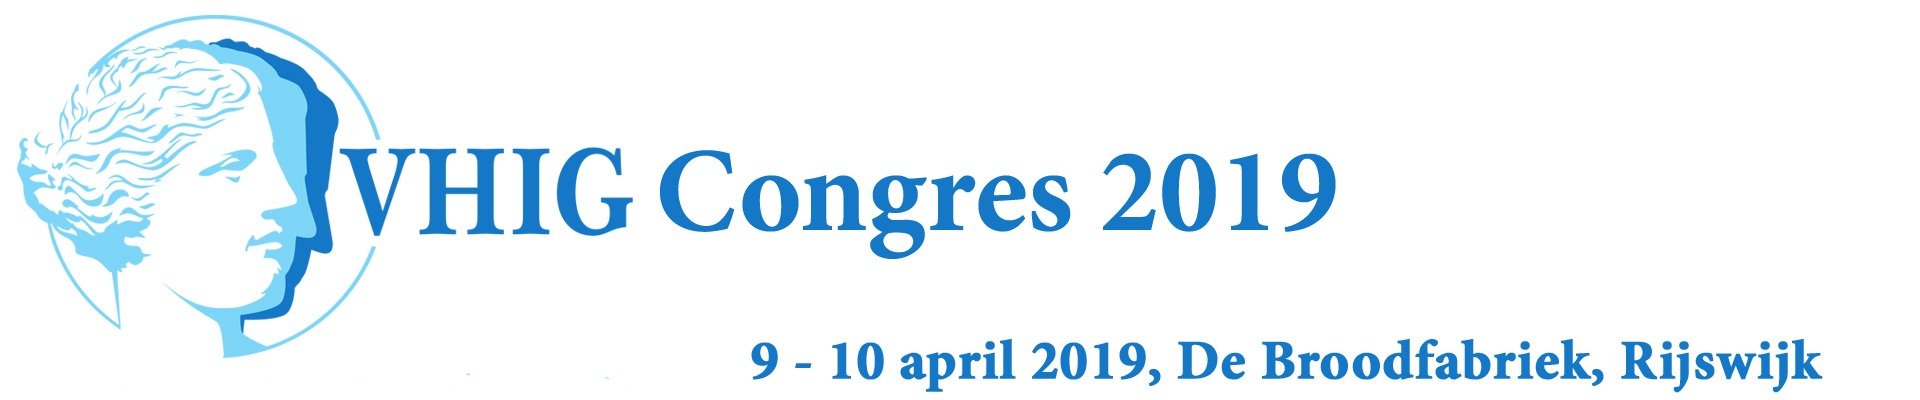 VHIG Congres 2019 (Beurs)